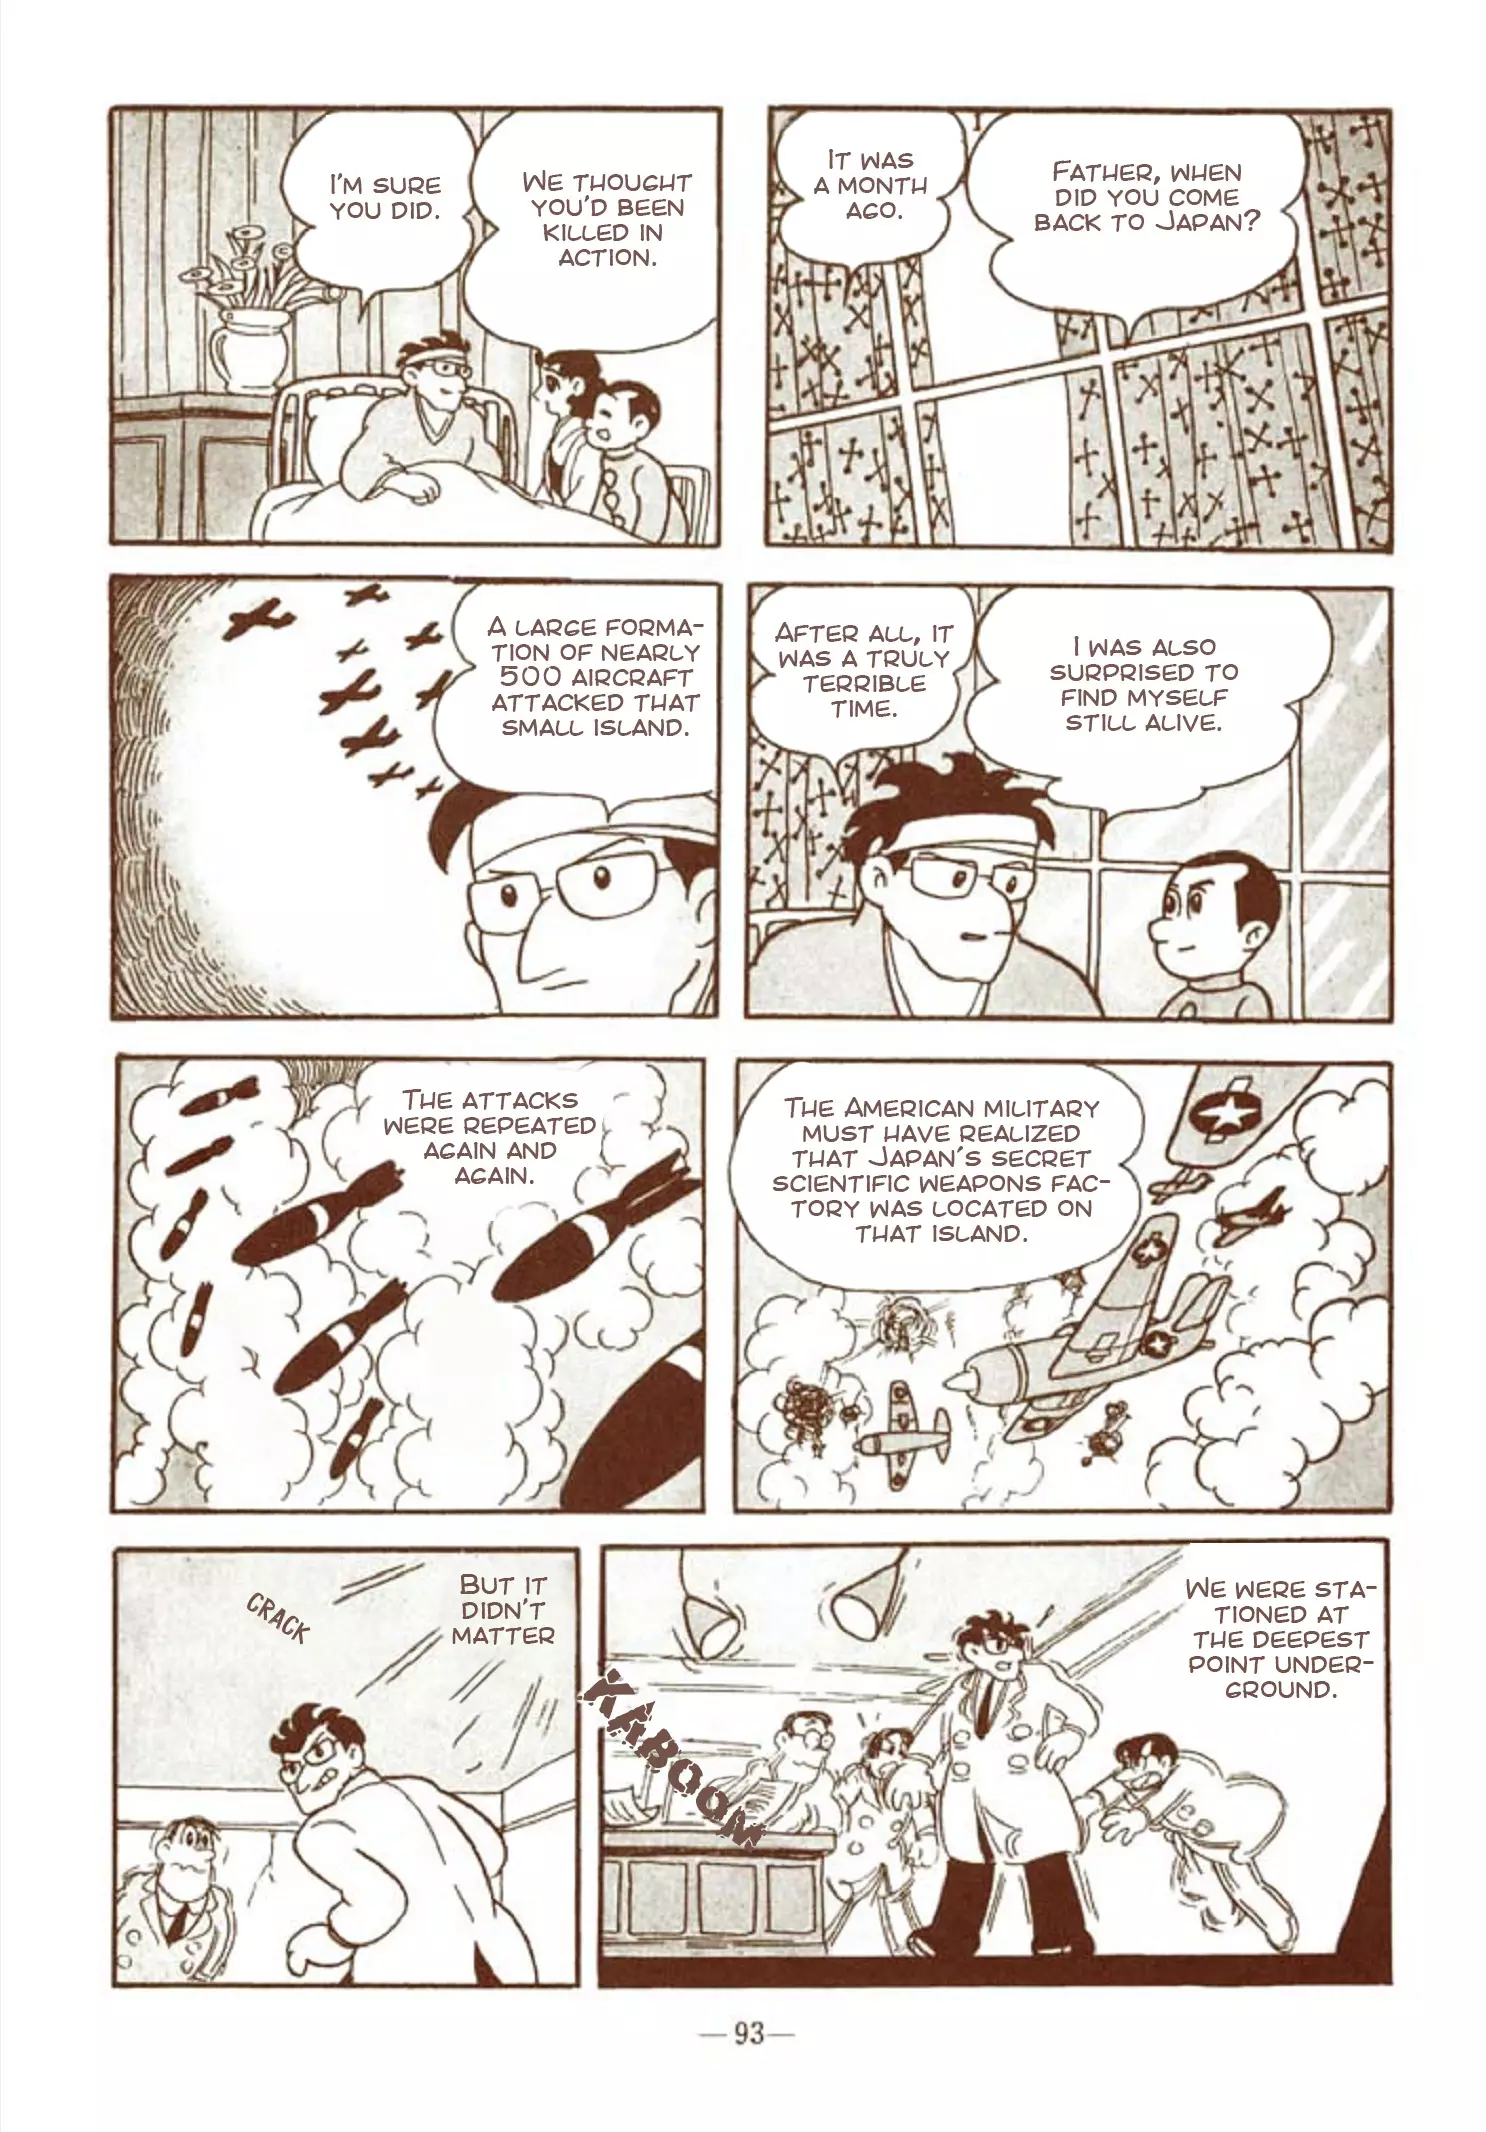 Tetsujin No. 28 Full Length Detective Manga - 1 page 96-504e8b94